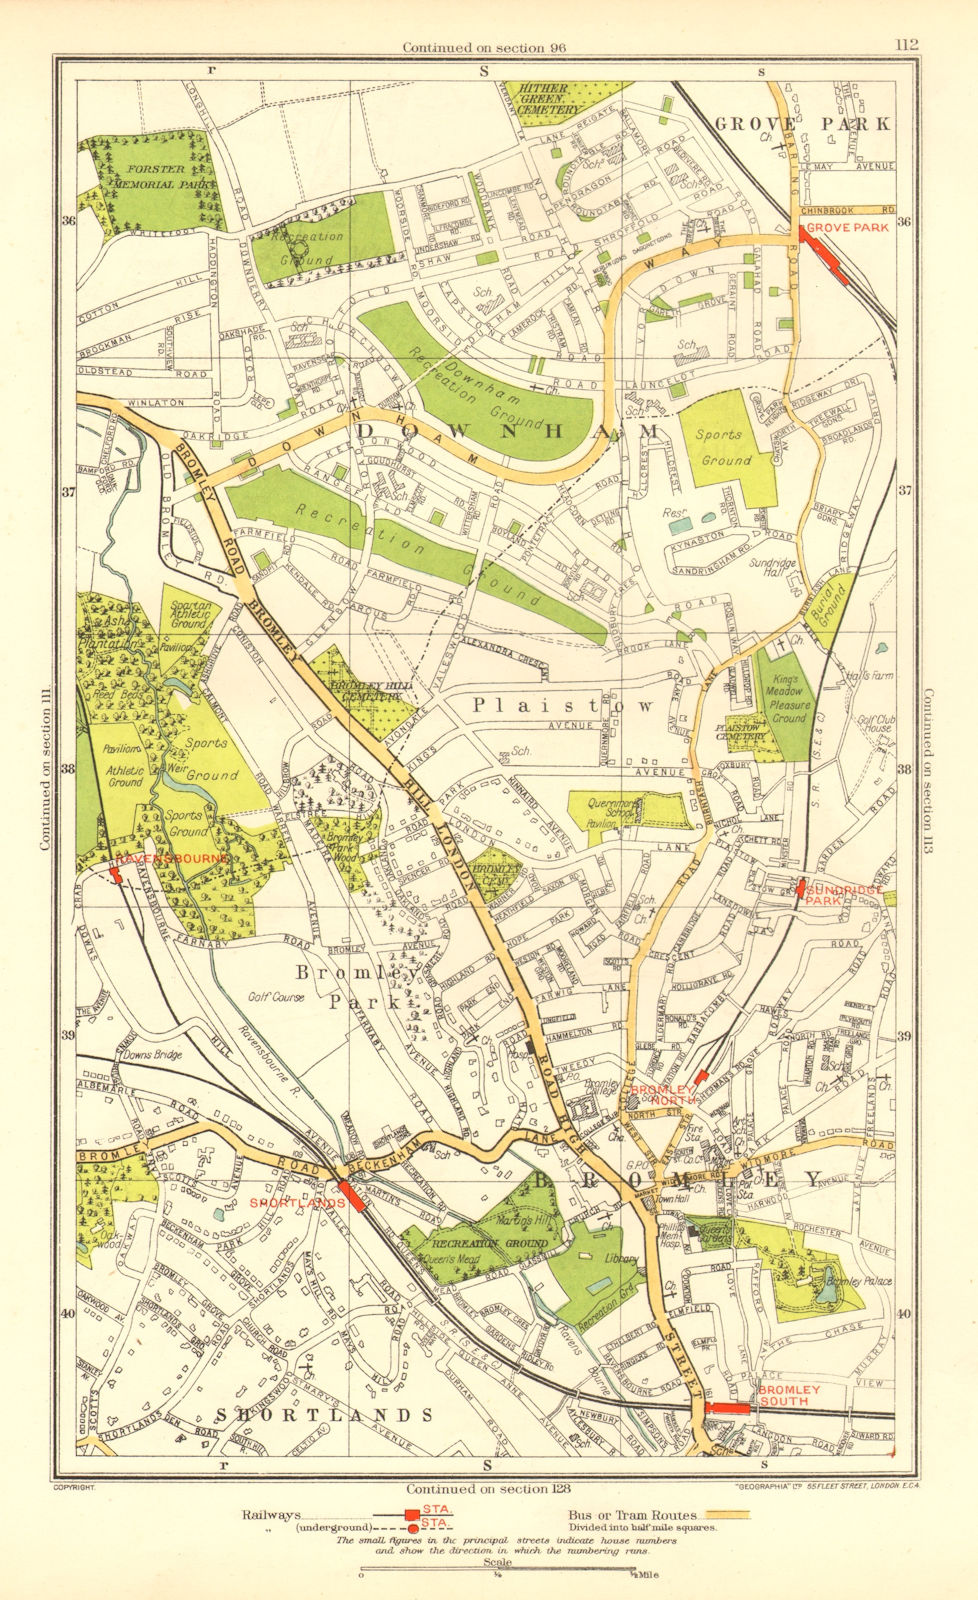 BROMLEY. Downham Grove Park Plaistow Shortlands Ravensbourne 1937 old map